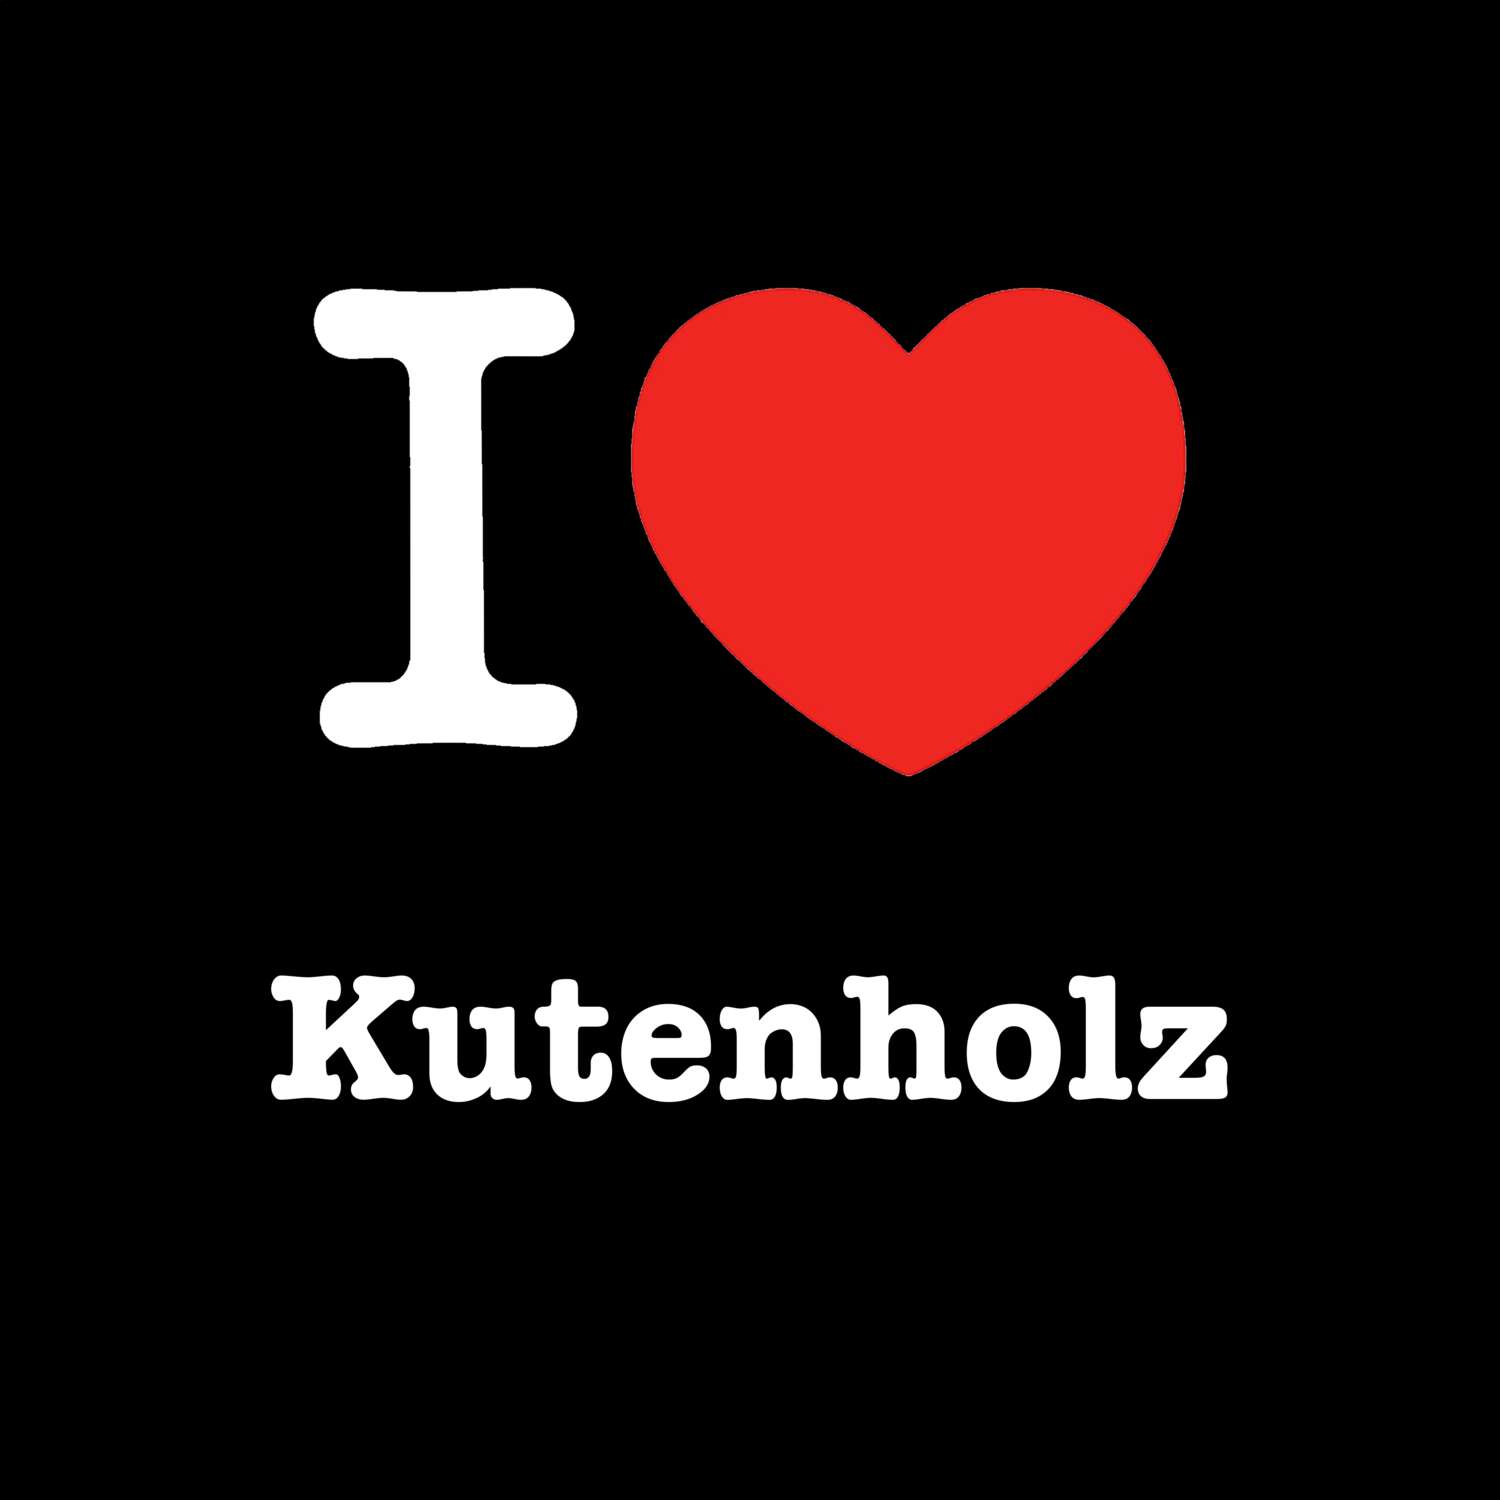 Kutenholz T-Shirt »I love«